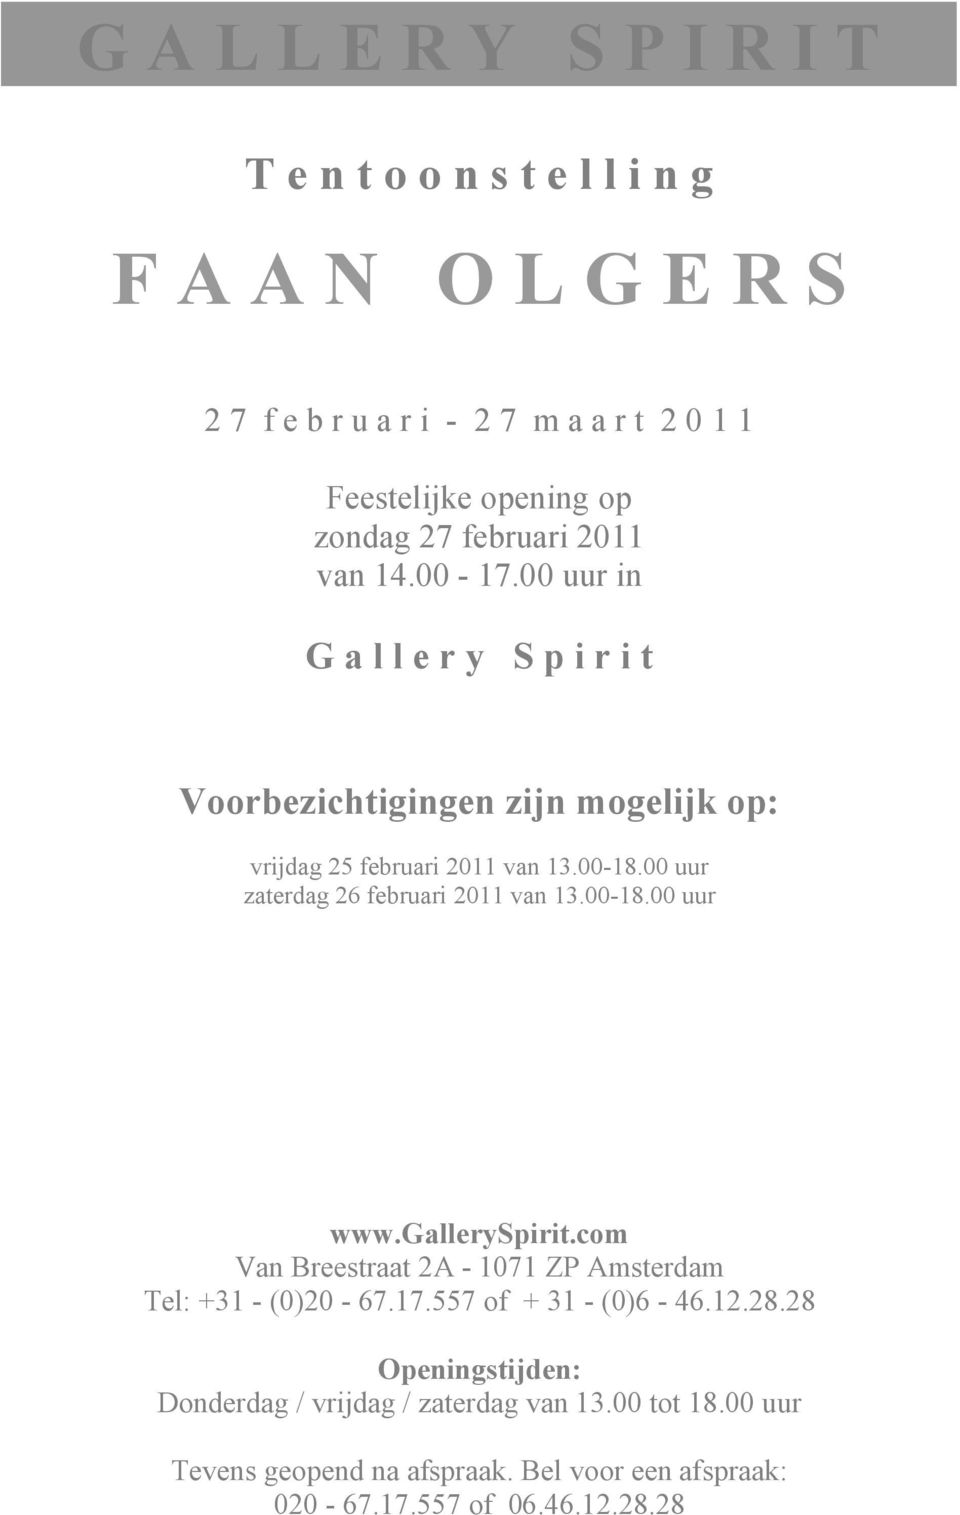 00 uur zaterdag 26 februari 2011 van 13.00-18.00 uur www.galleryspirit.com Van Breestraat 2A - 1071 ZP Amsterdam Tel: +31 - (0)20-67.17.